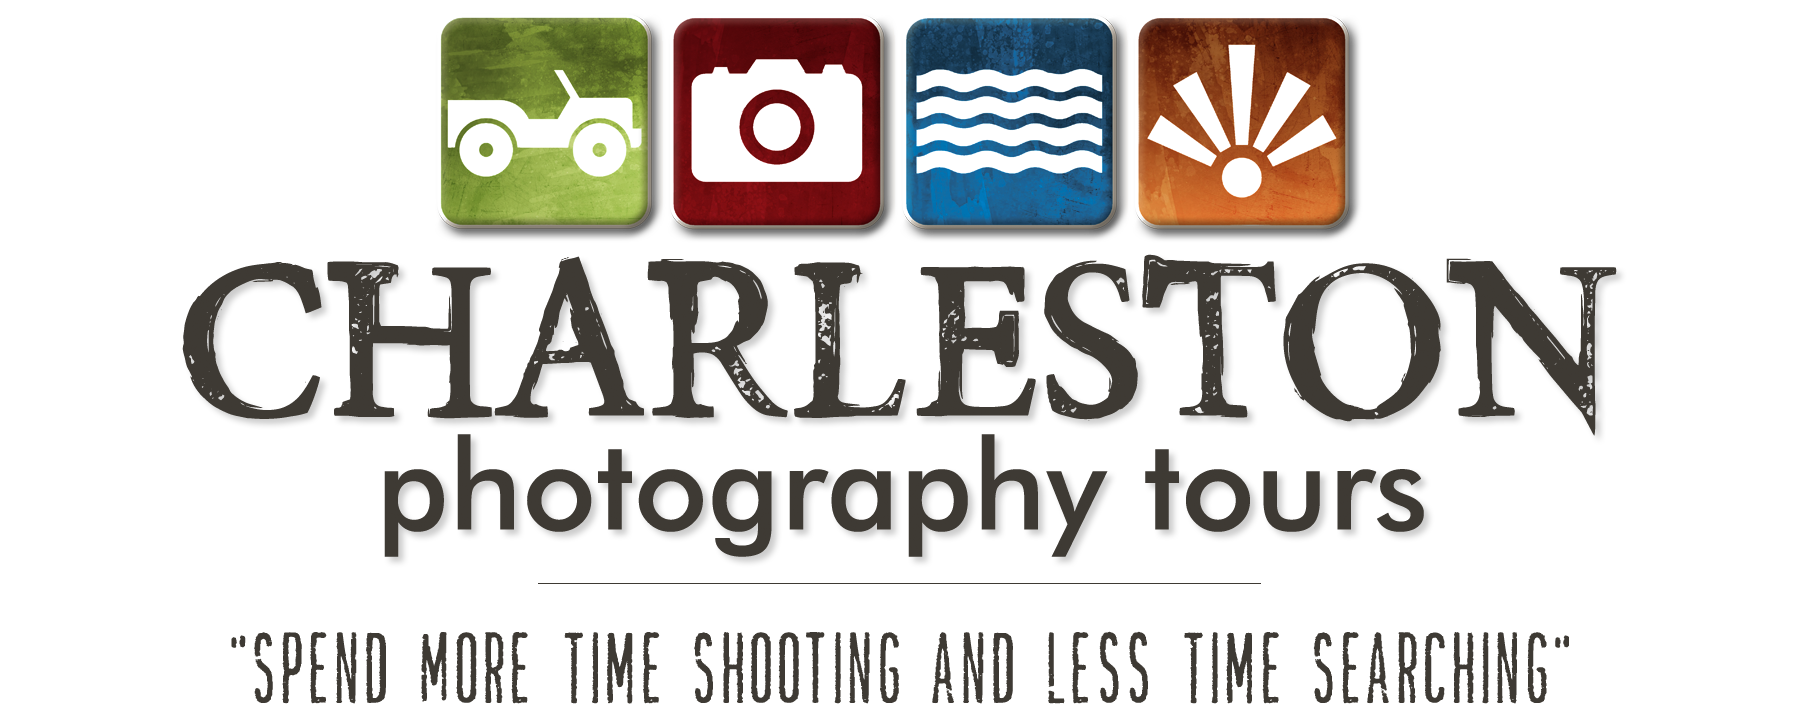 Charleston Photography Tours